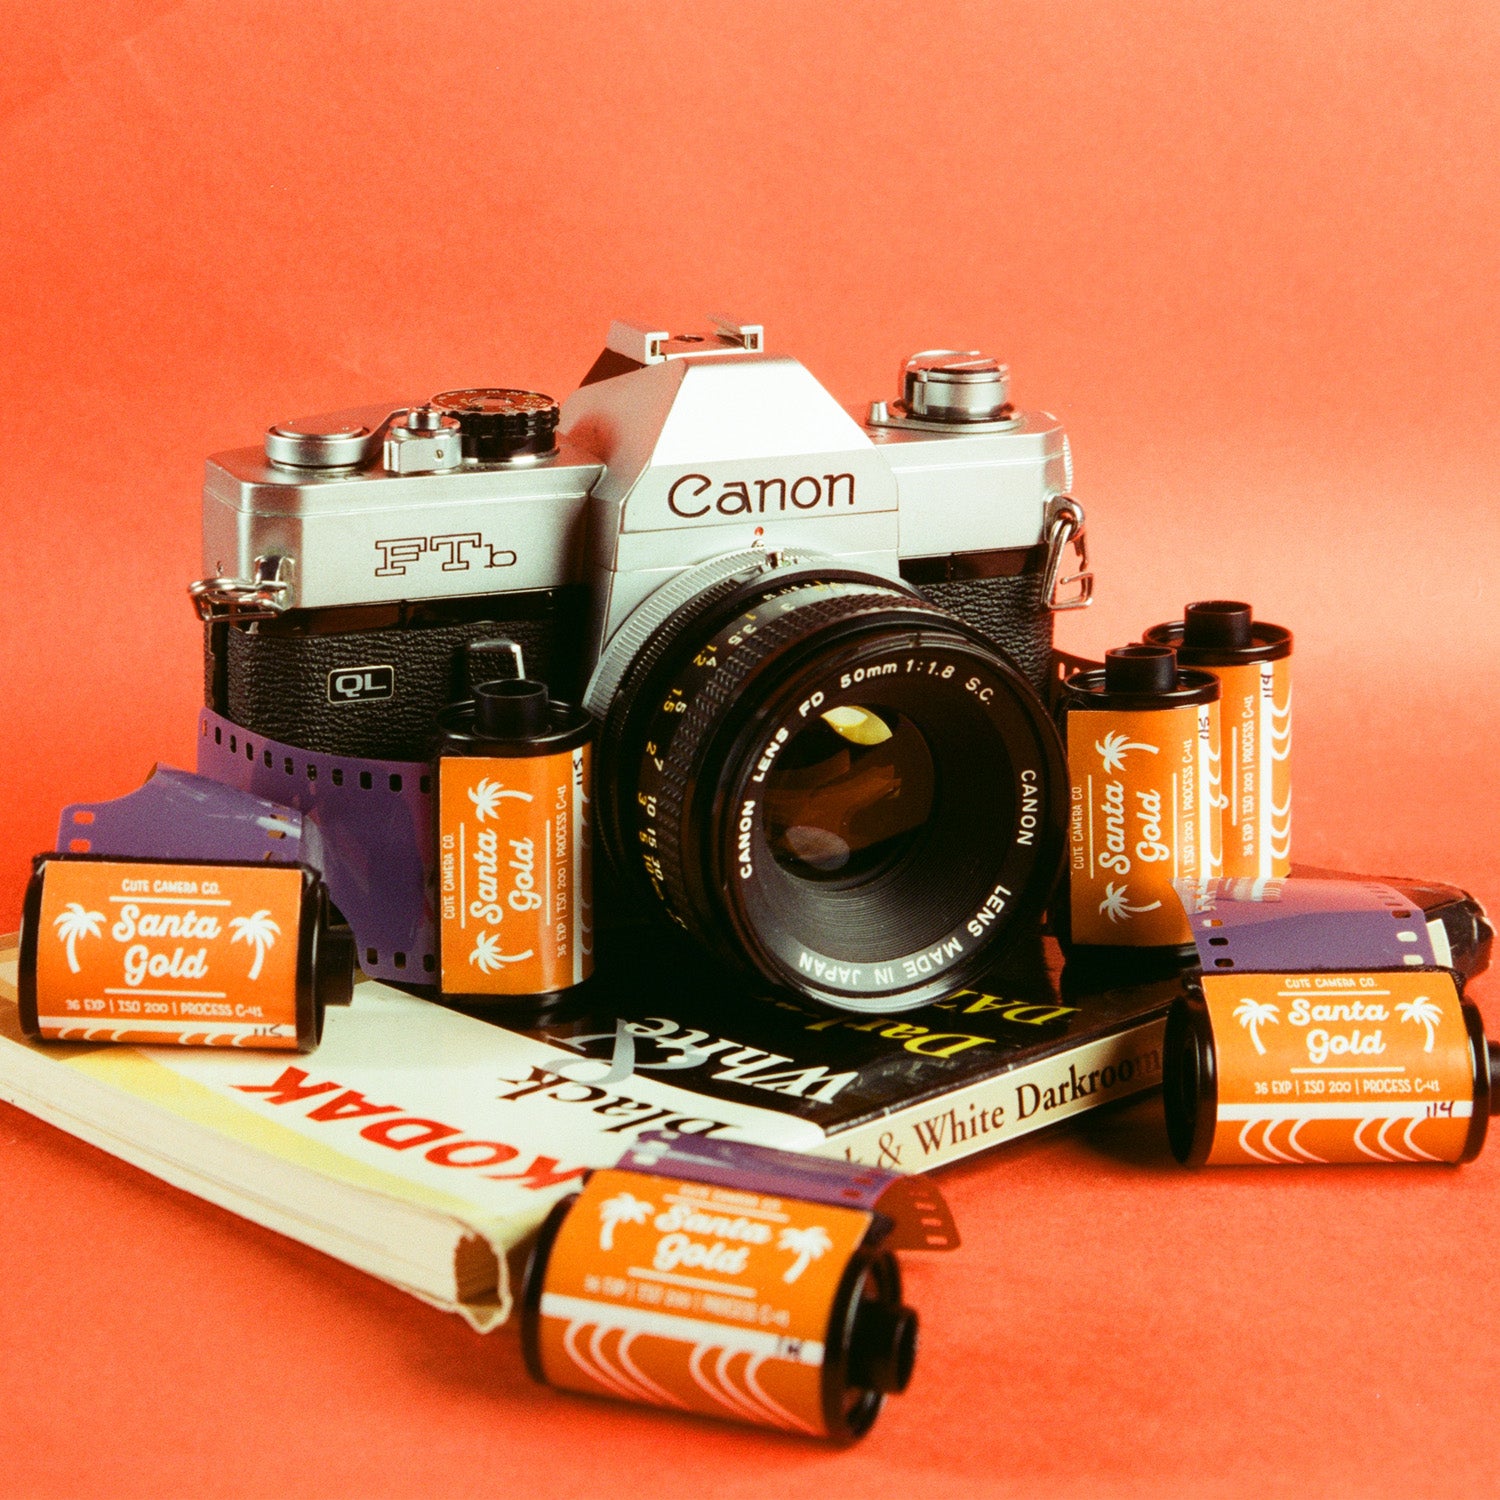 Santa Gold - 35mm Color Film